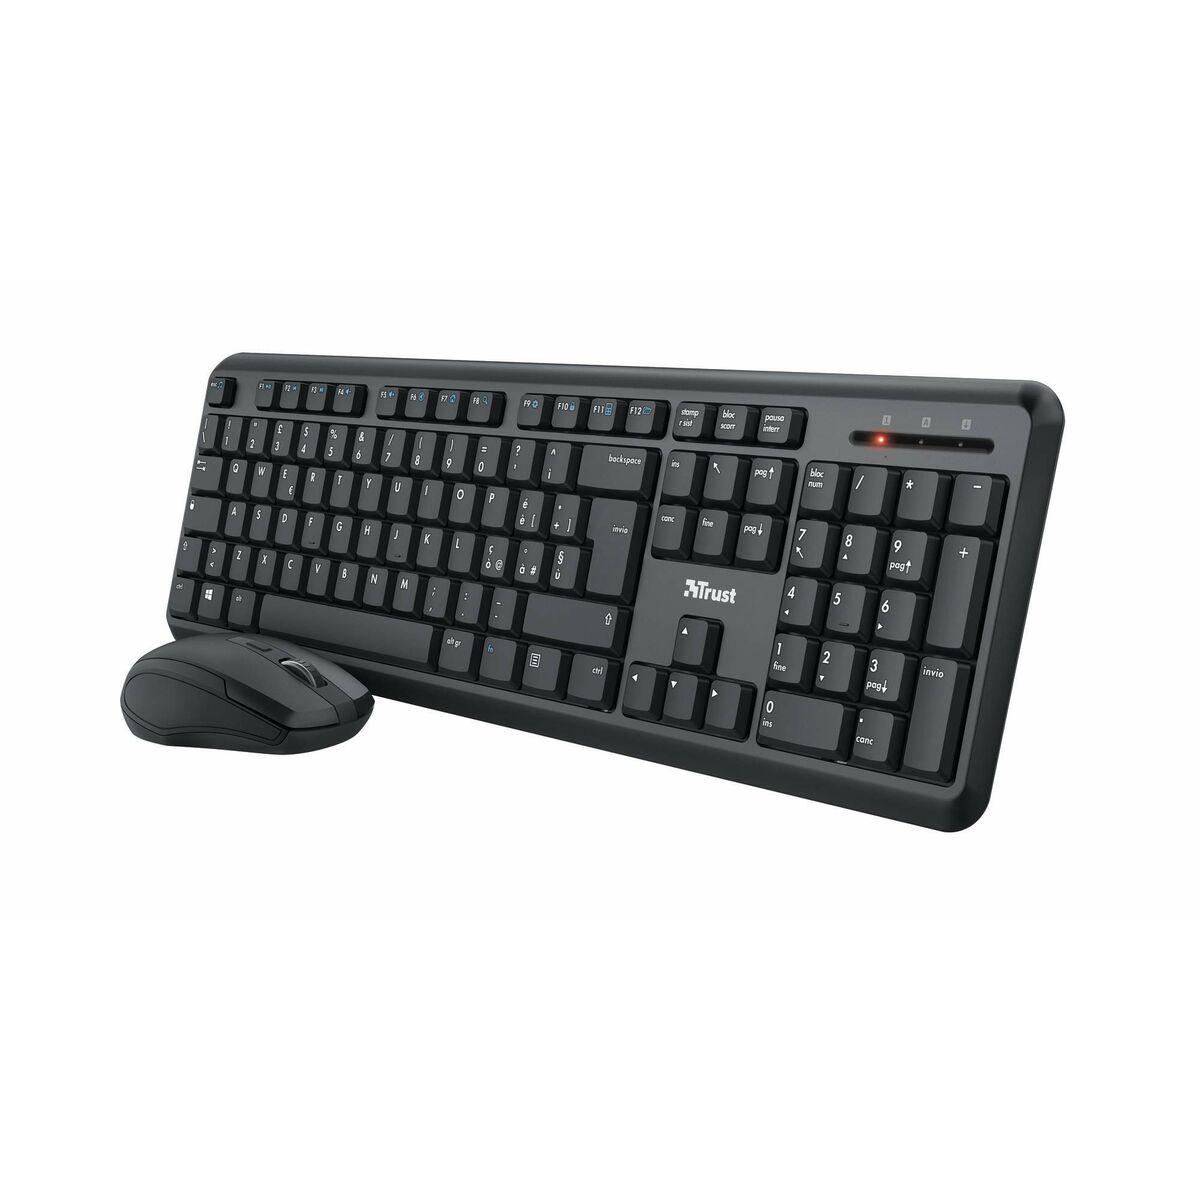 Keyboard and Mouse Trust 24081 Black (Refurbished B)